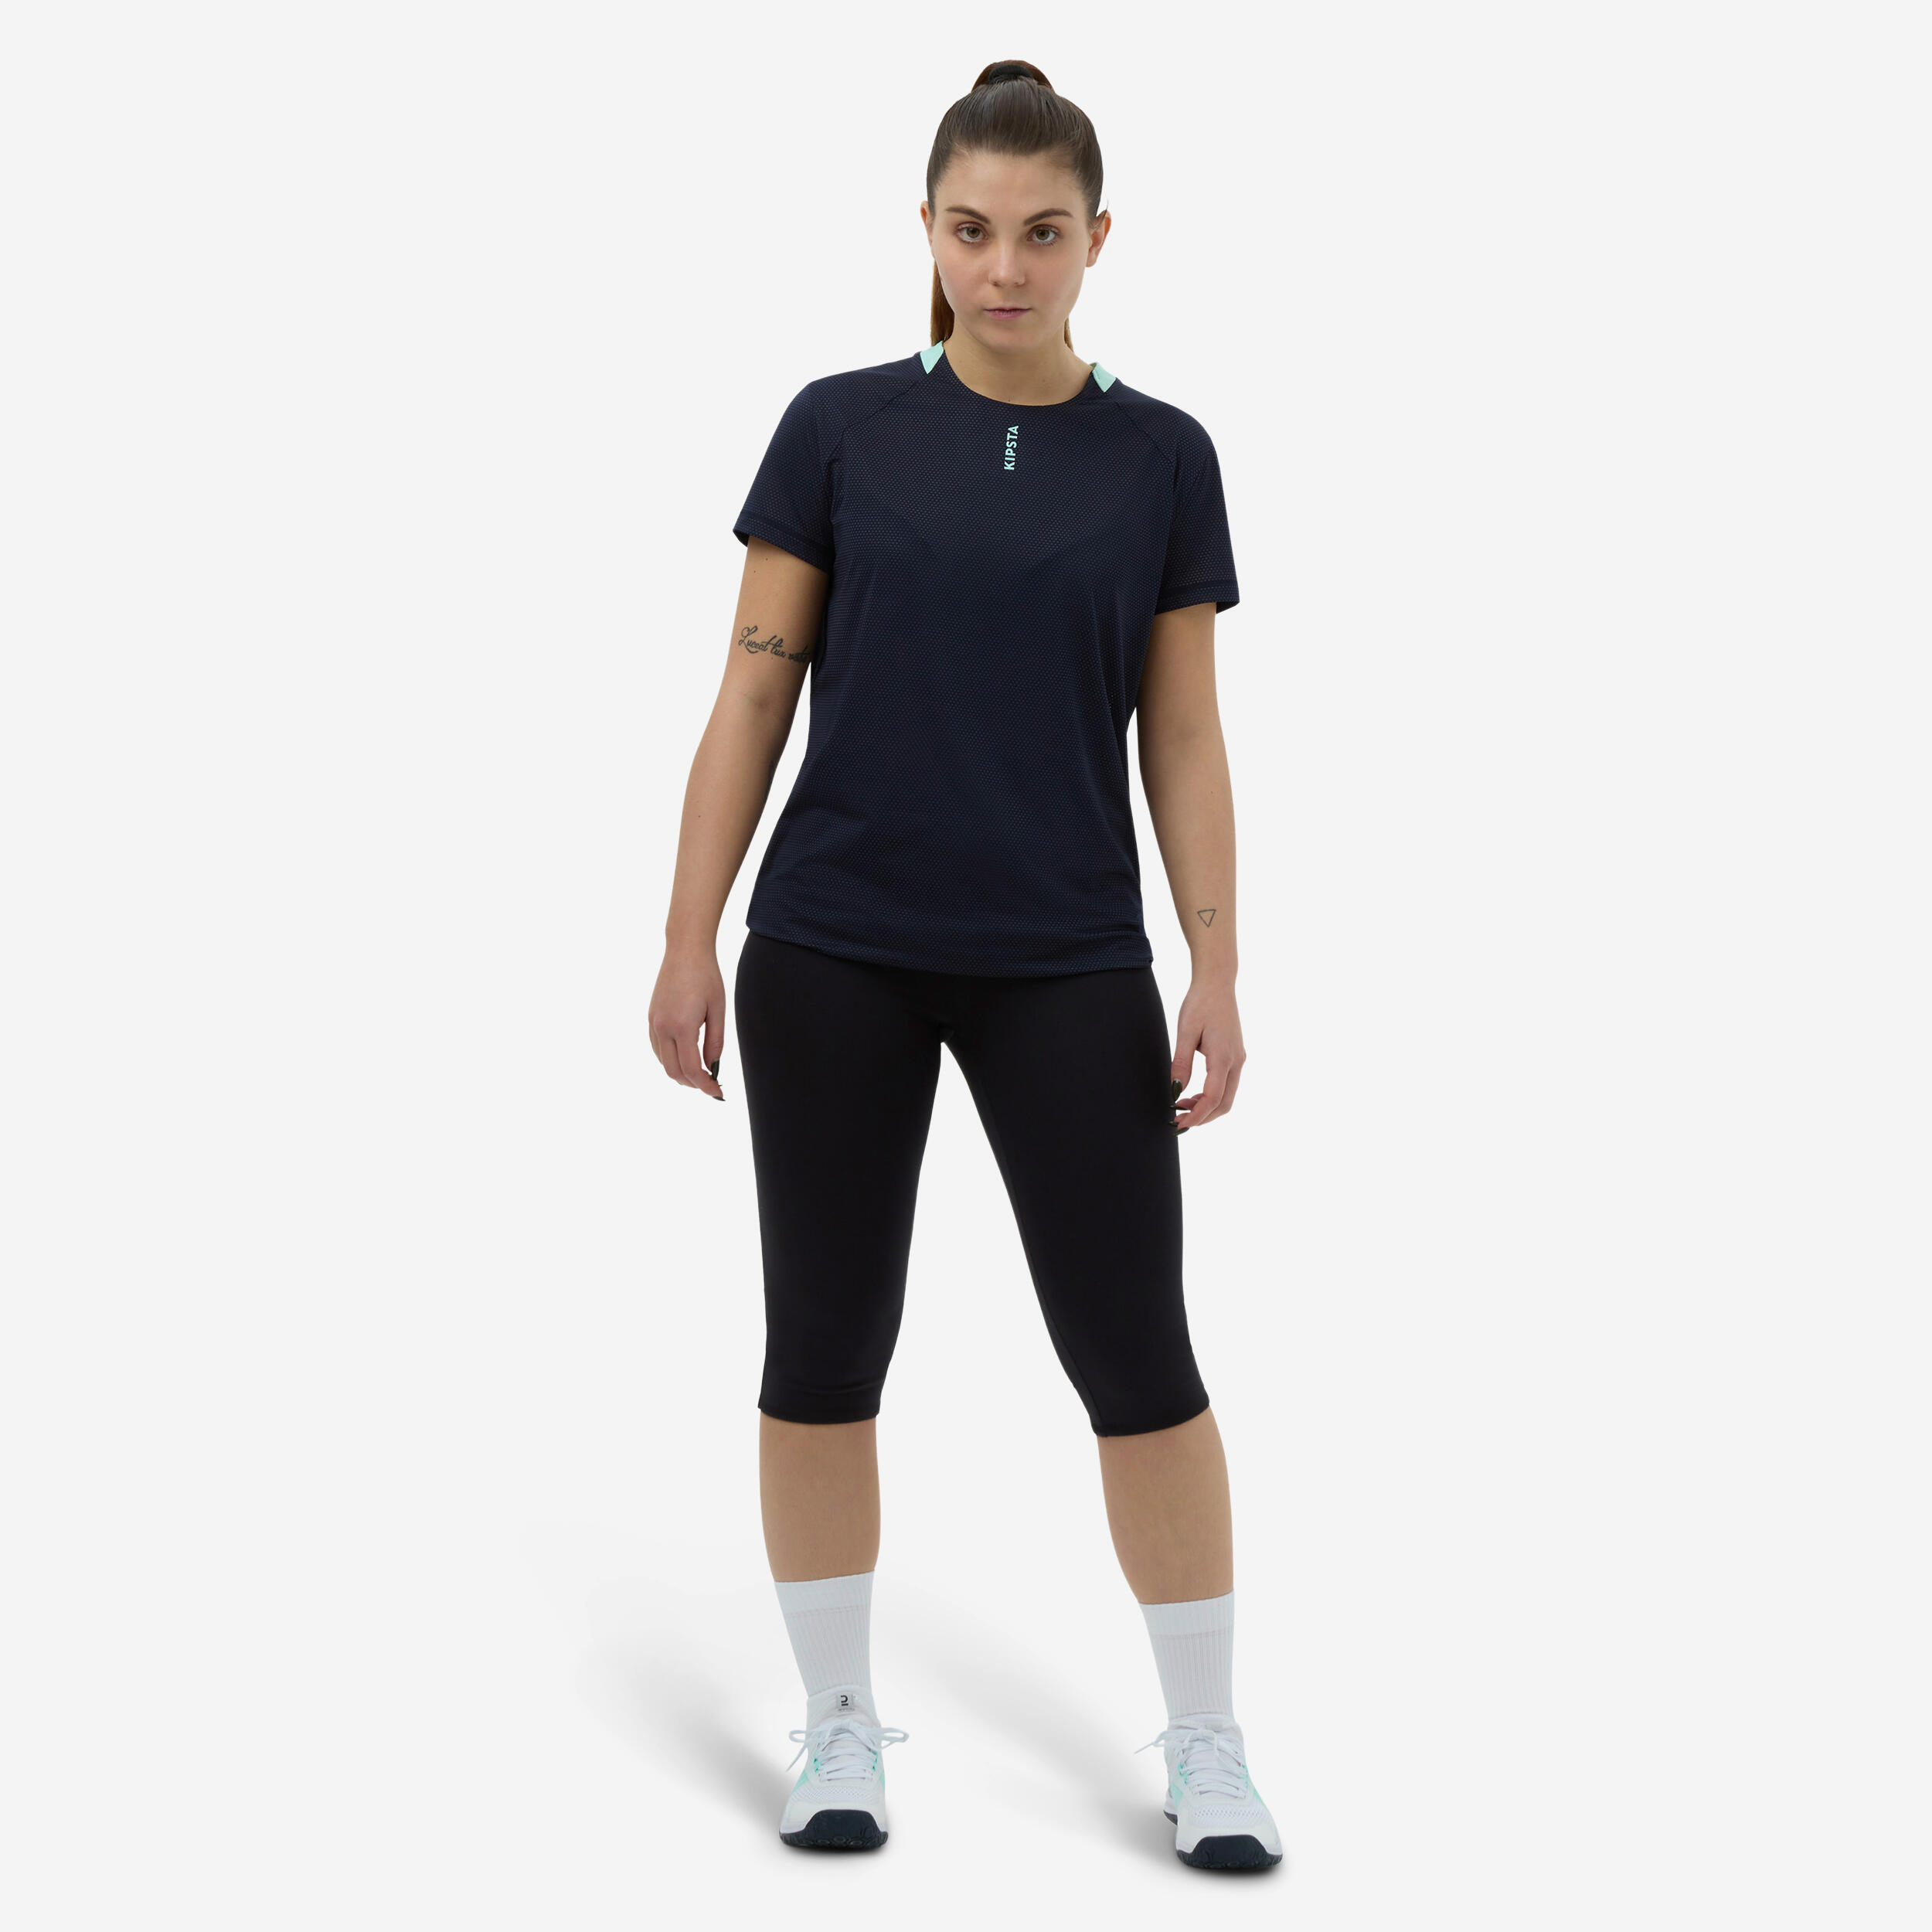 Women's Cotton Volleyball Leggings - Black 1/4